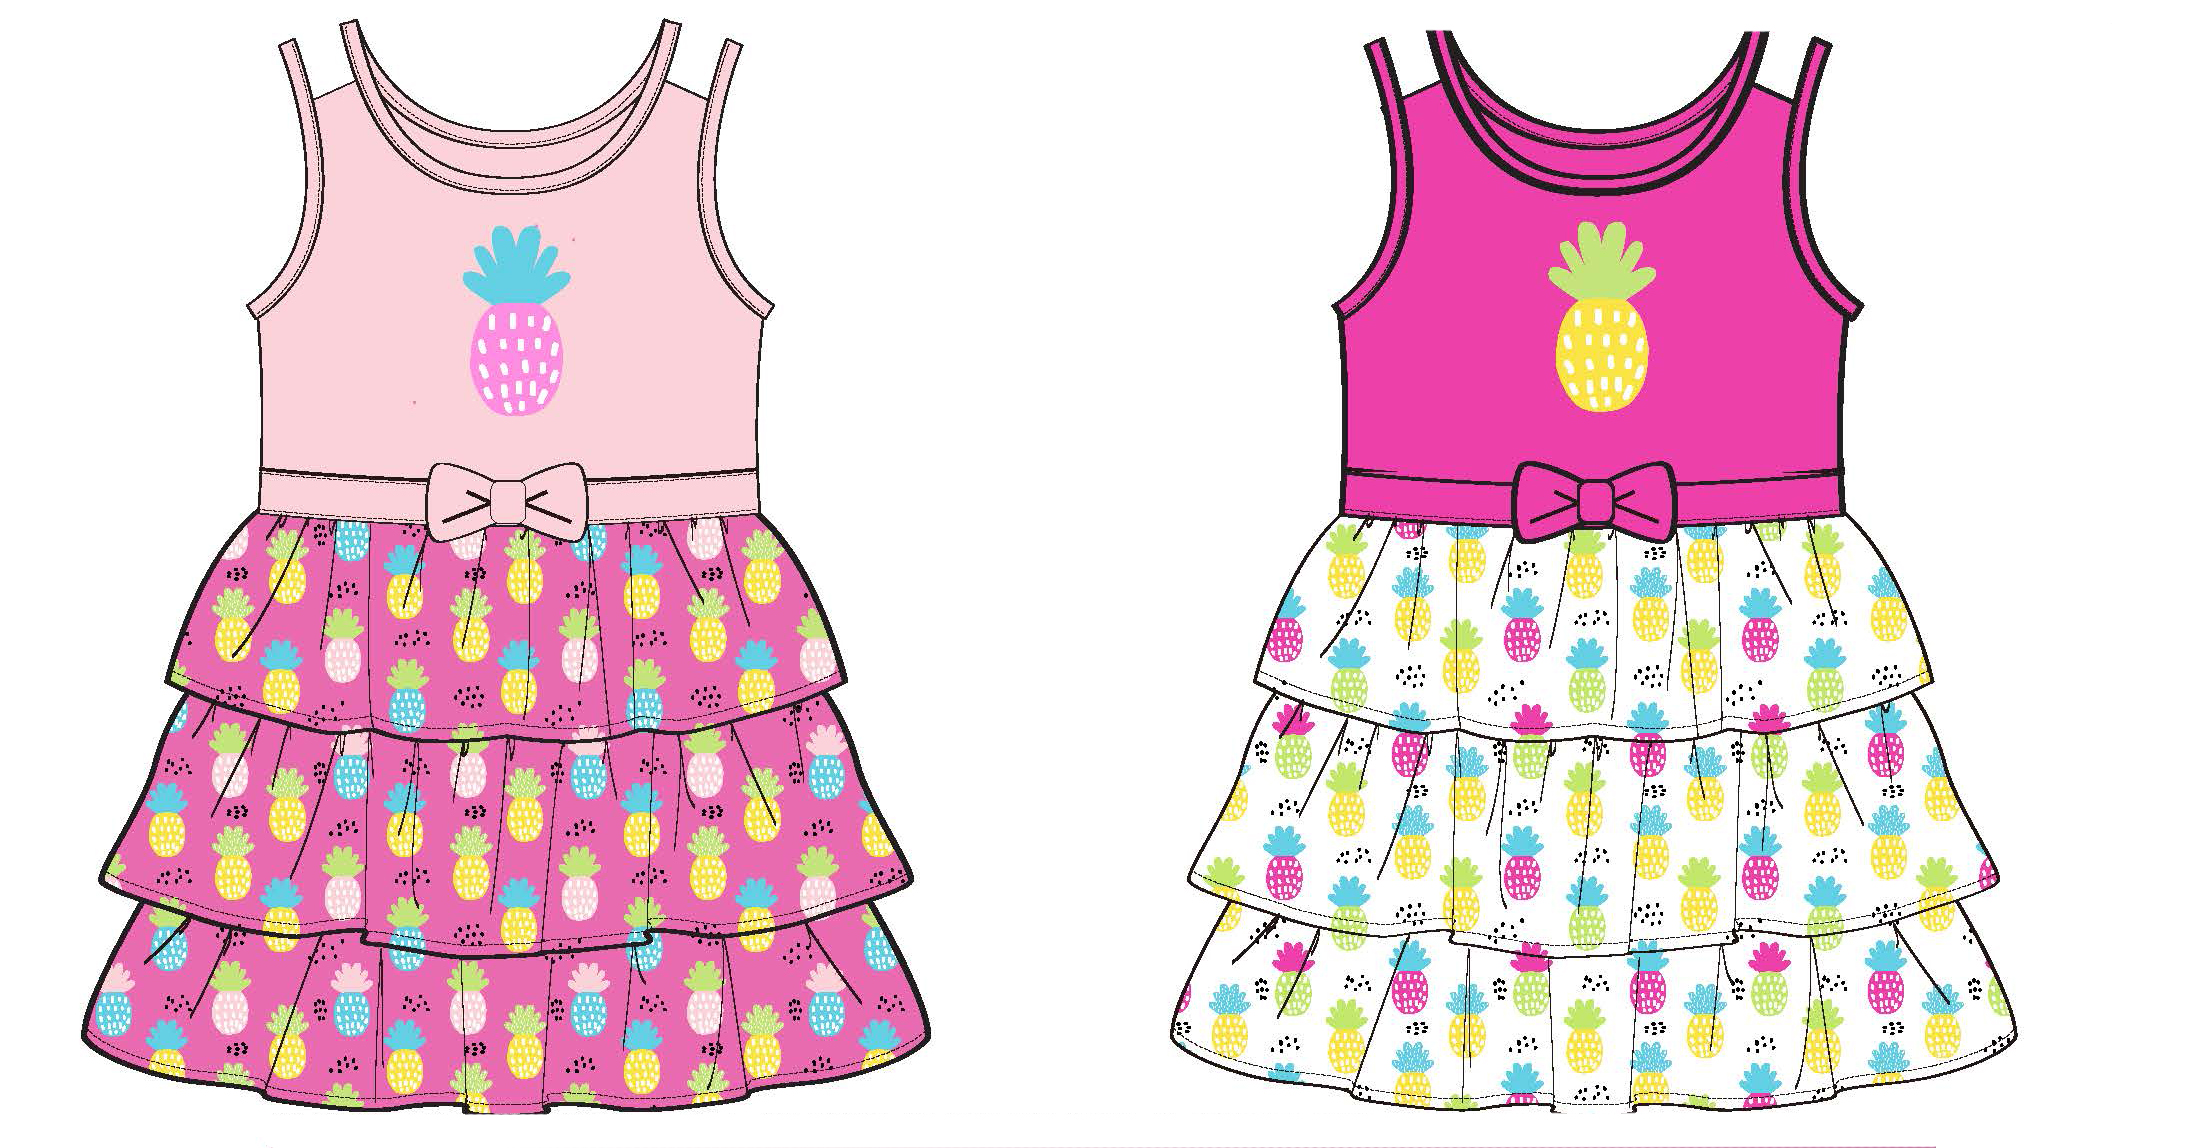 Toddler Girl's Sleeveless Tiered Ruffle Knit DRESS w/ Ribbon Bow Embellishment - Pineapple Print - S